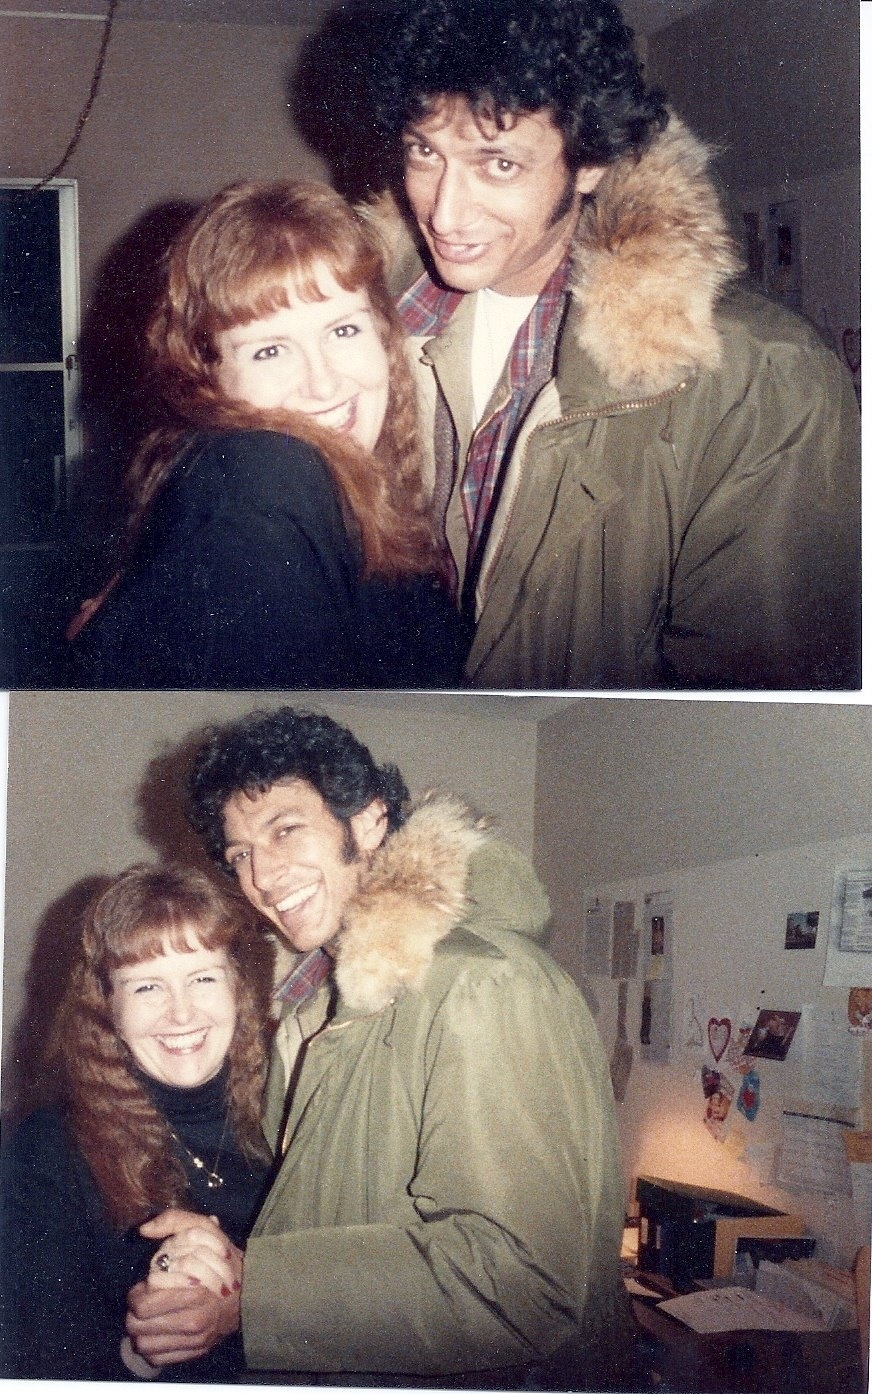 Tracy Weisert & Jeff Goldblum dancing in the SILVERADO Production office in Santa Fe, NM in March 1985